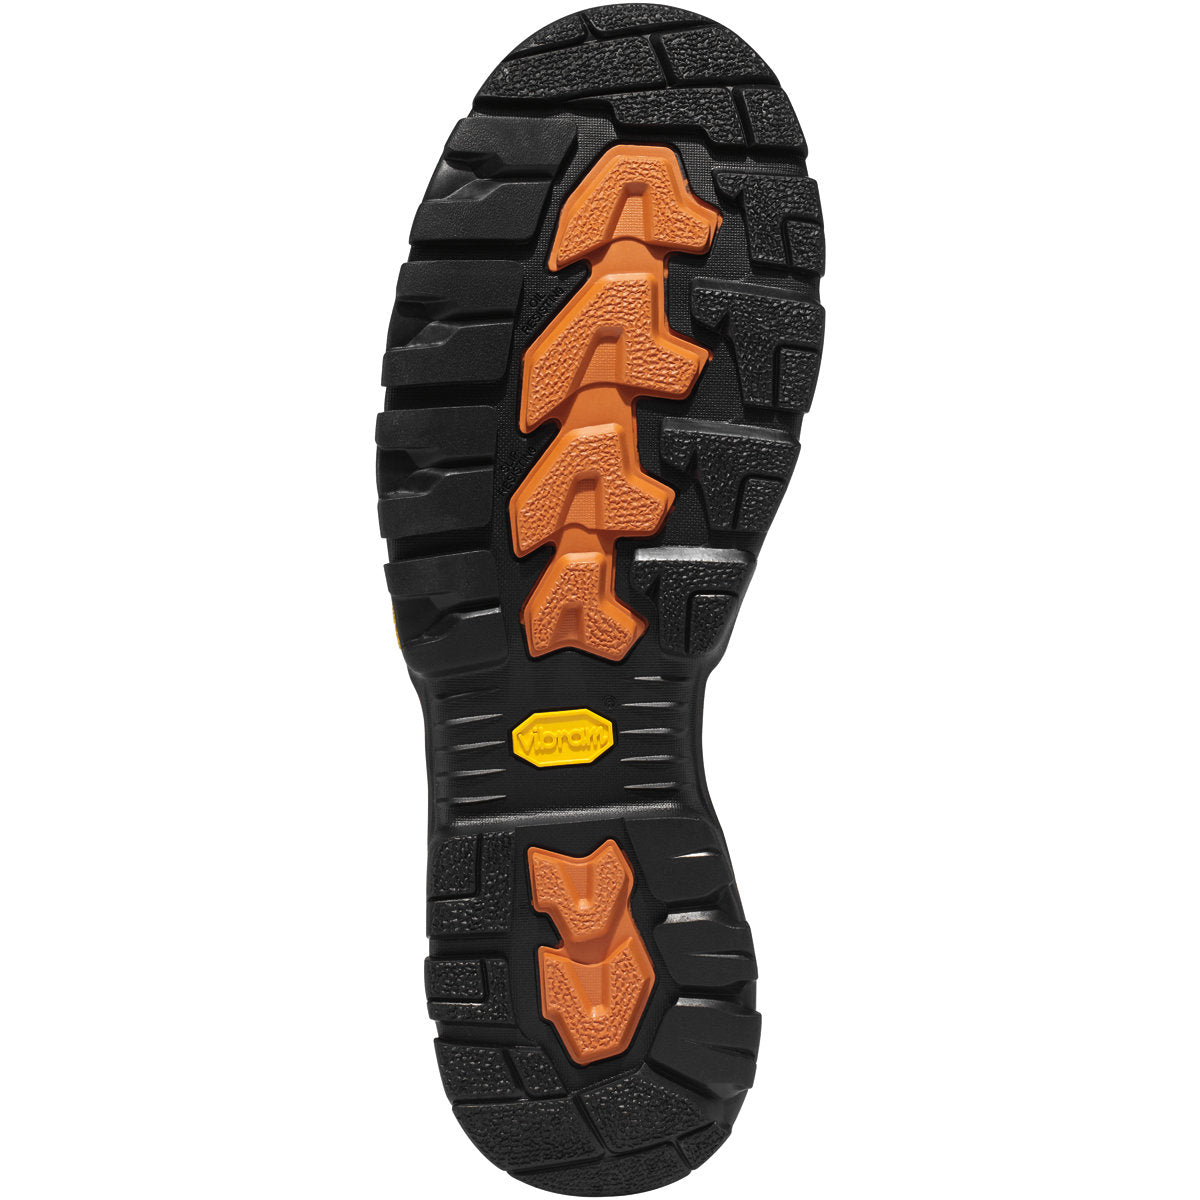 Danner Men's Vicious 4.5 Inch Composite Toe